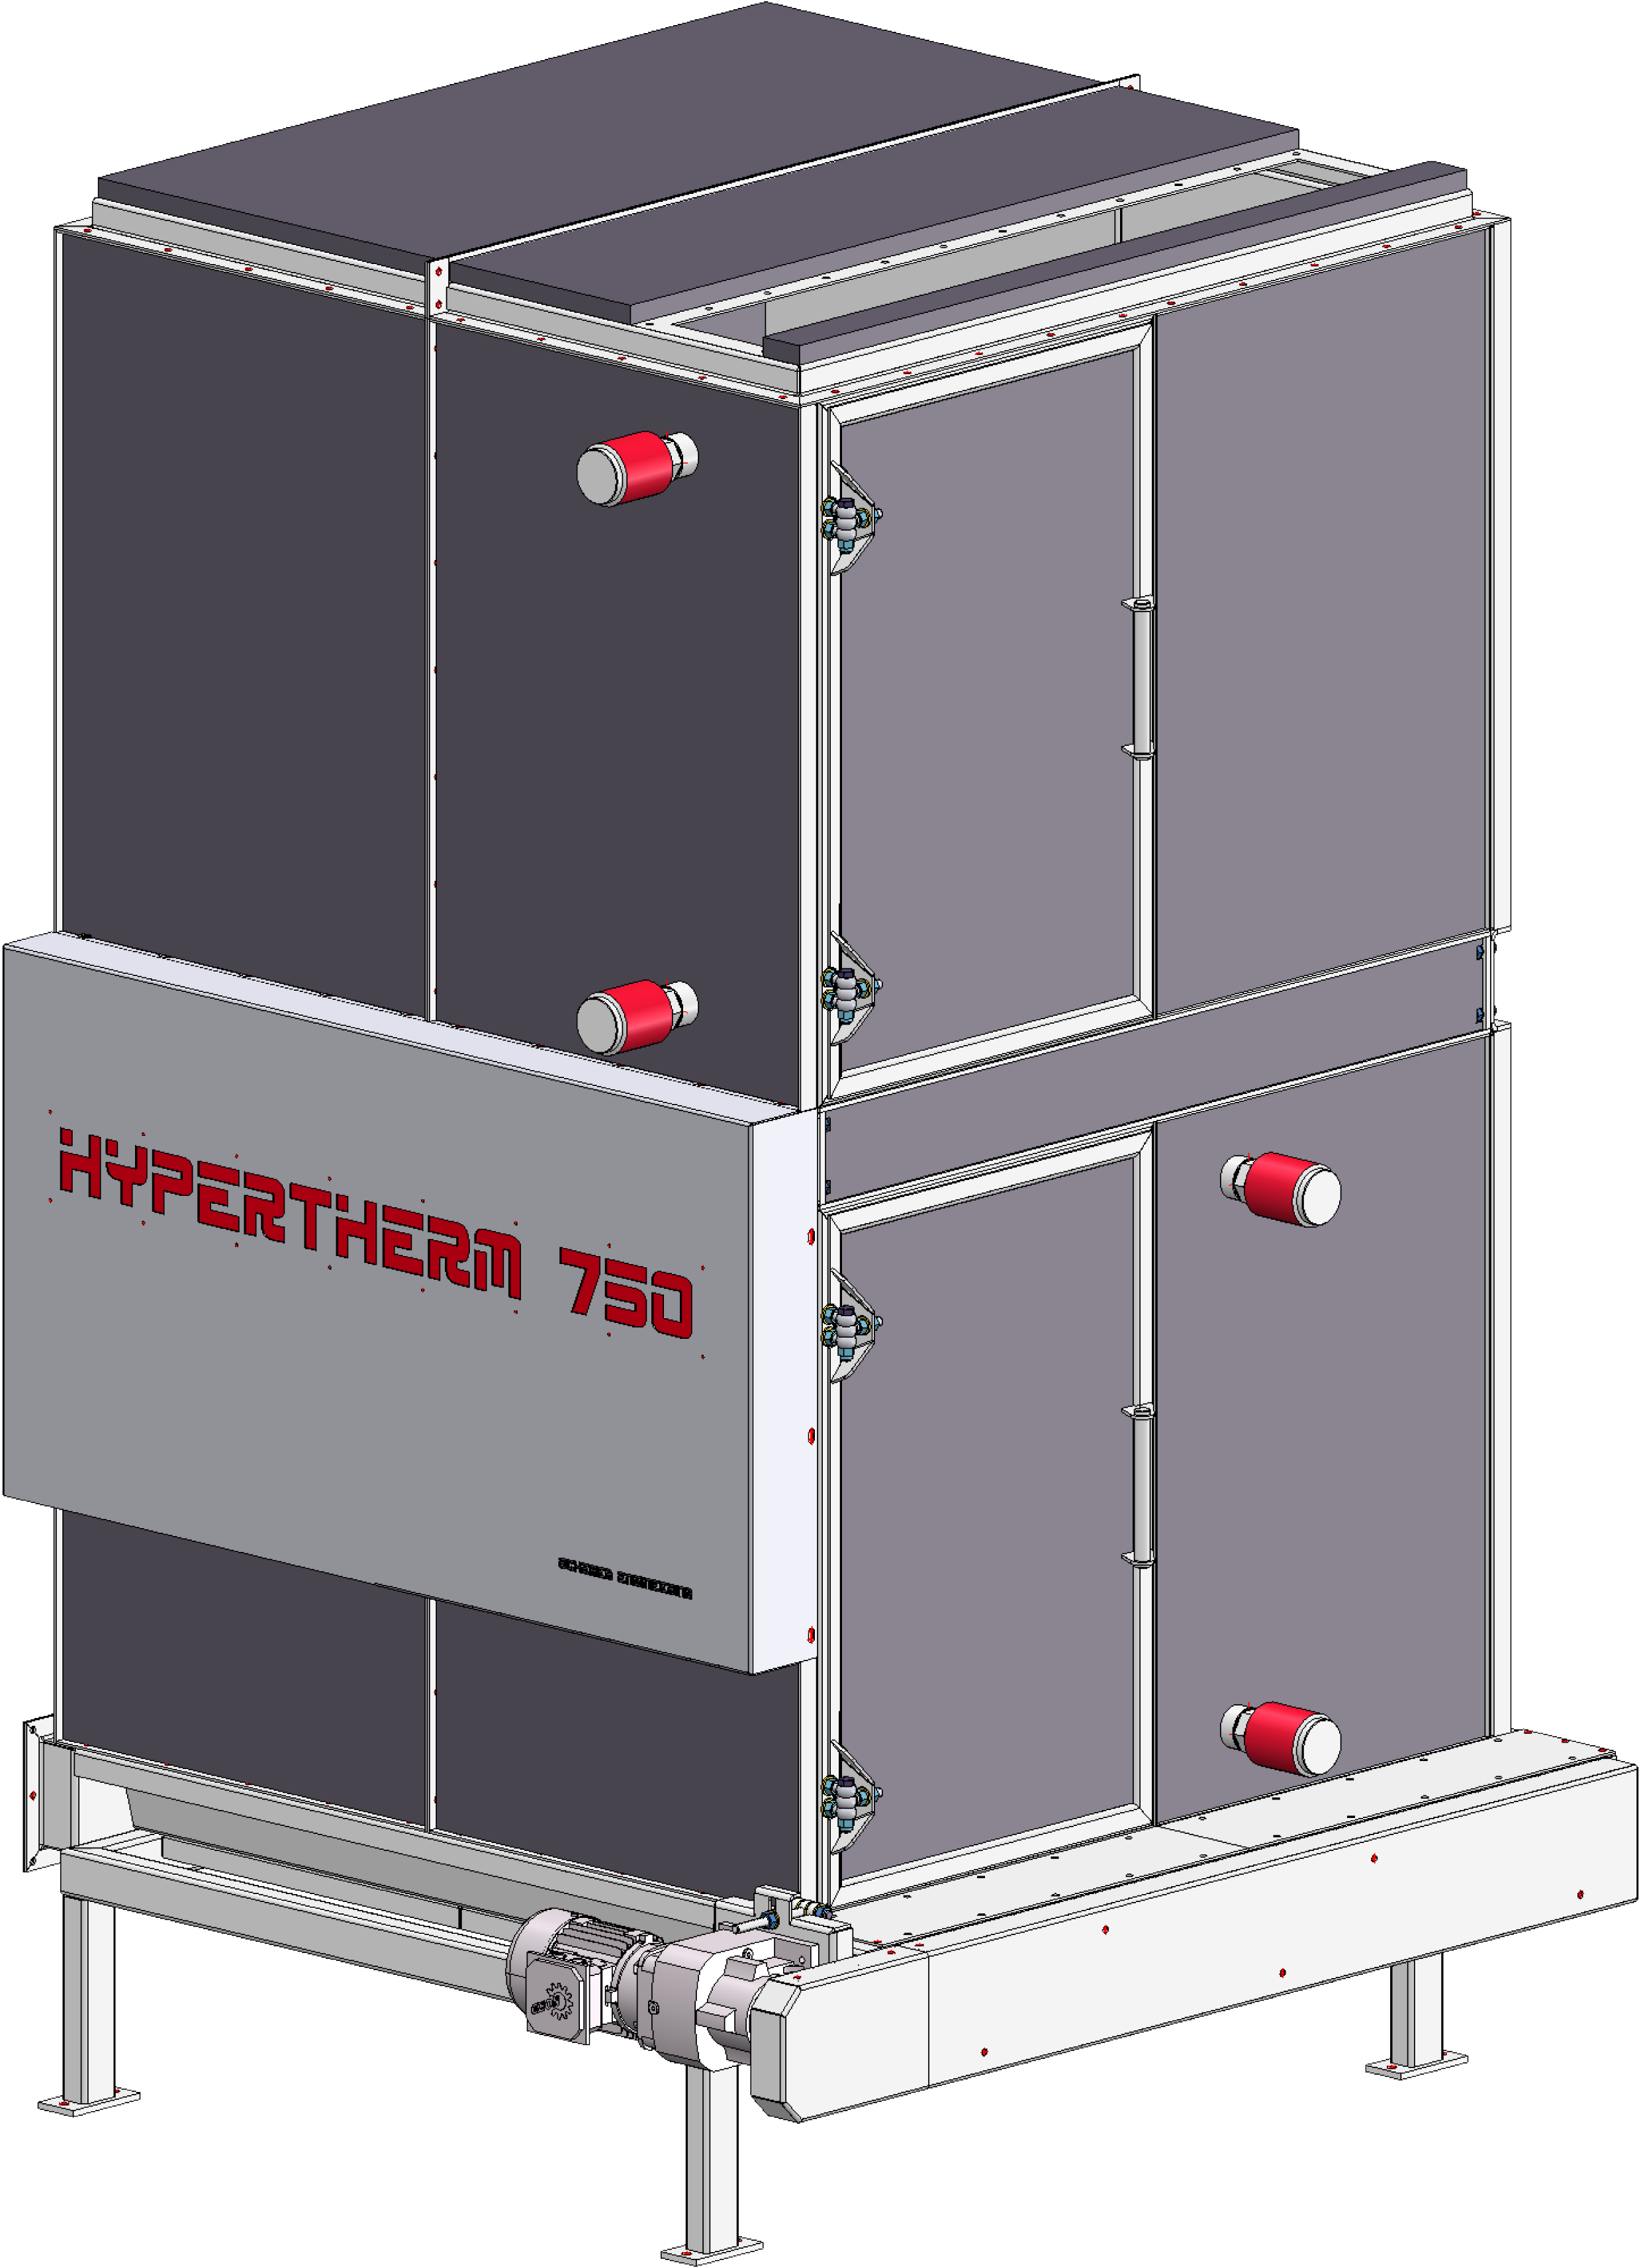 Higienizador Hypertherm 750